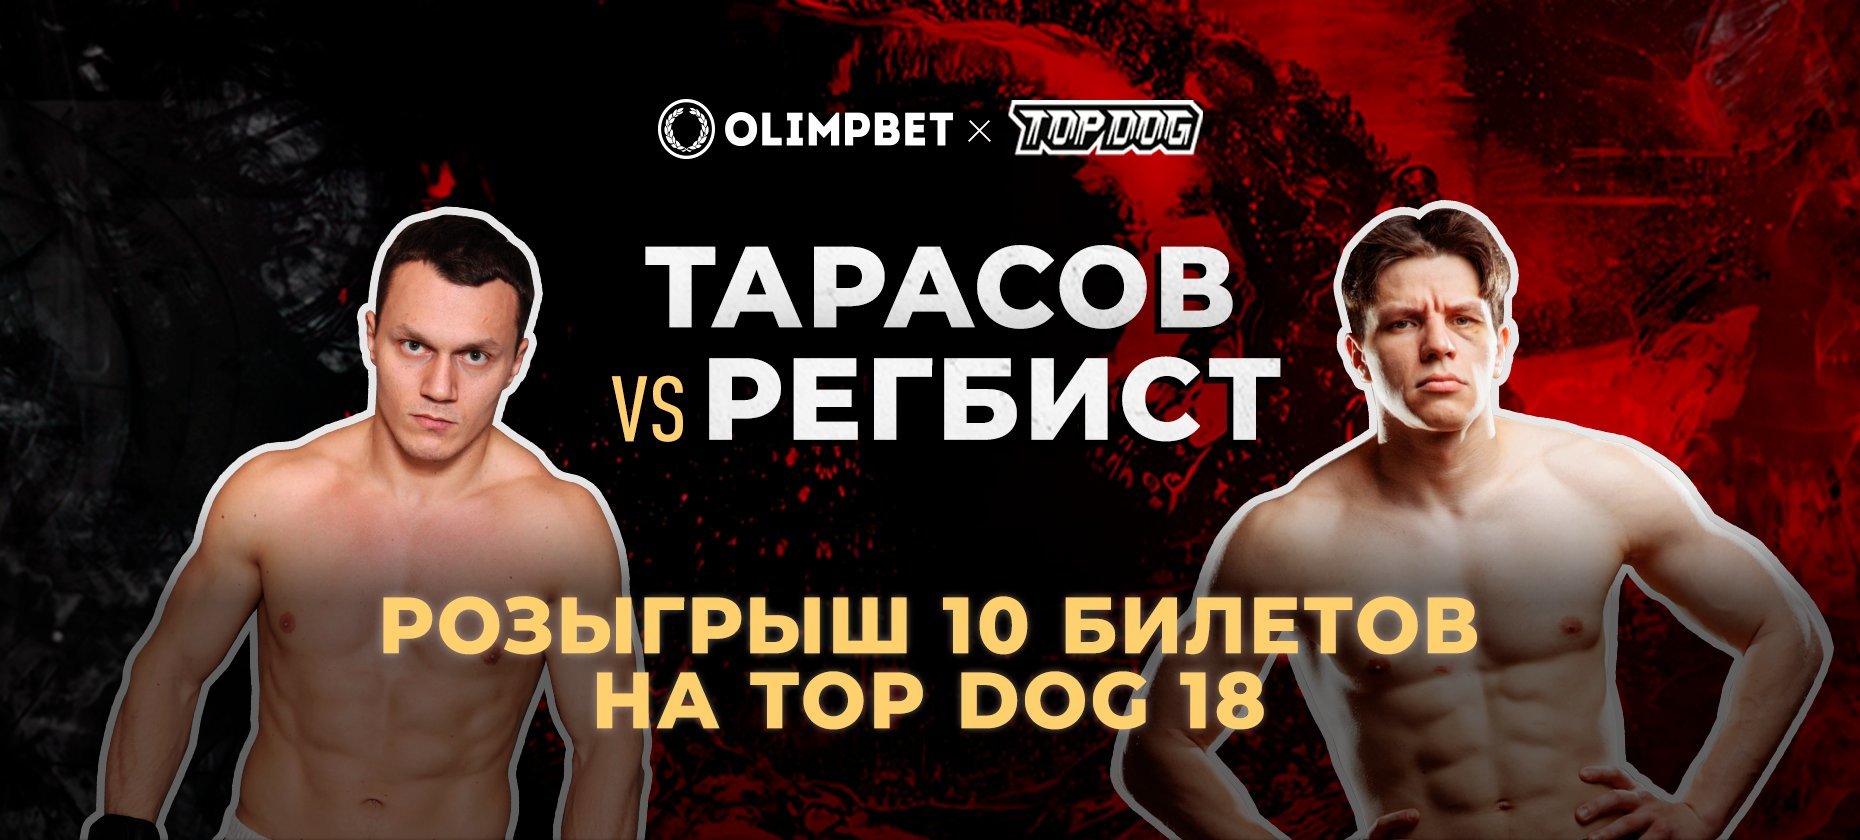 Olimpbet разыгрывает билеты на бой Регбист — Тарасов